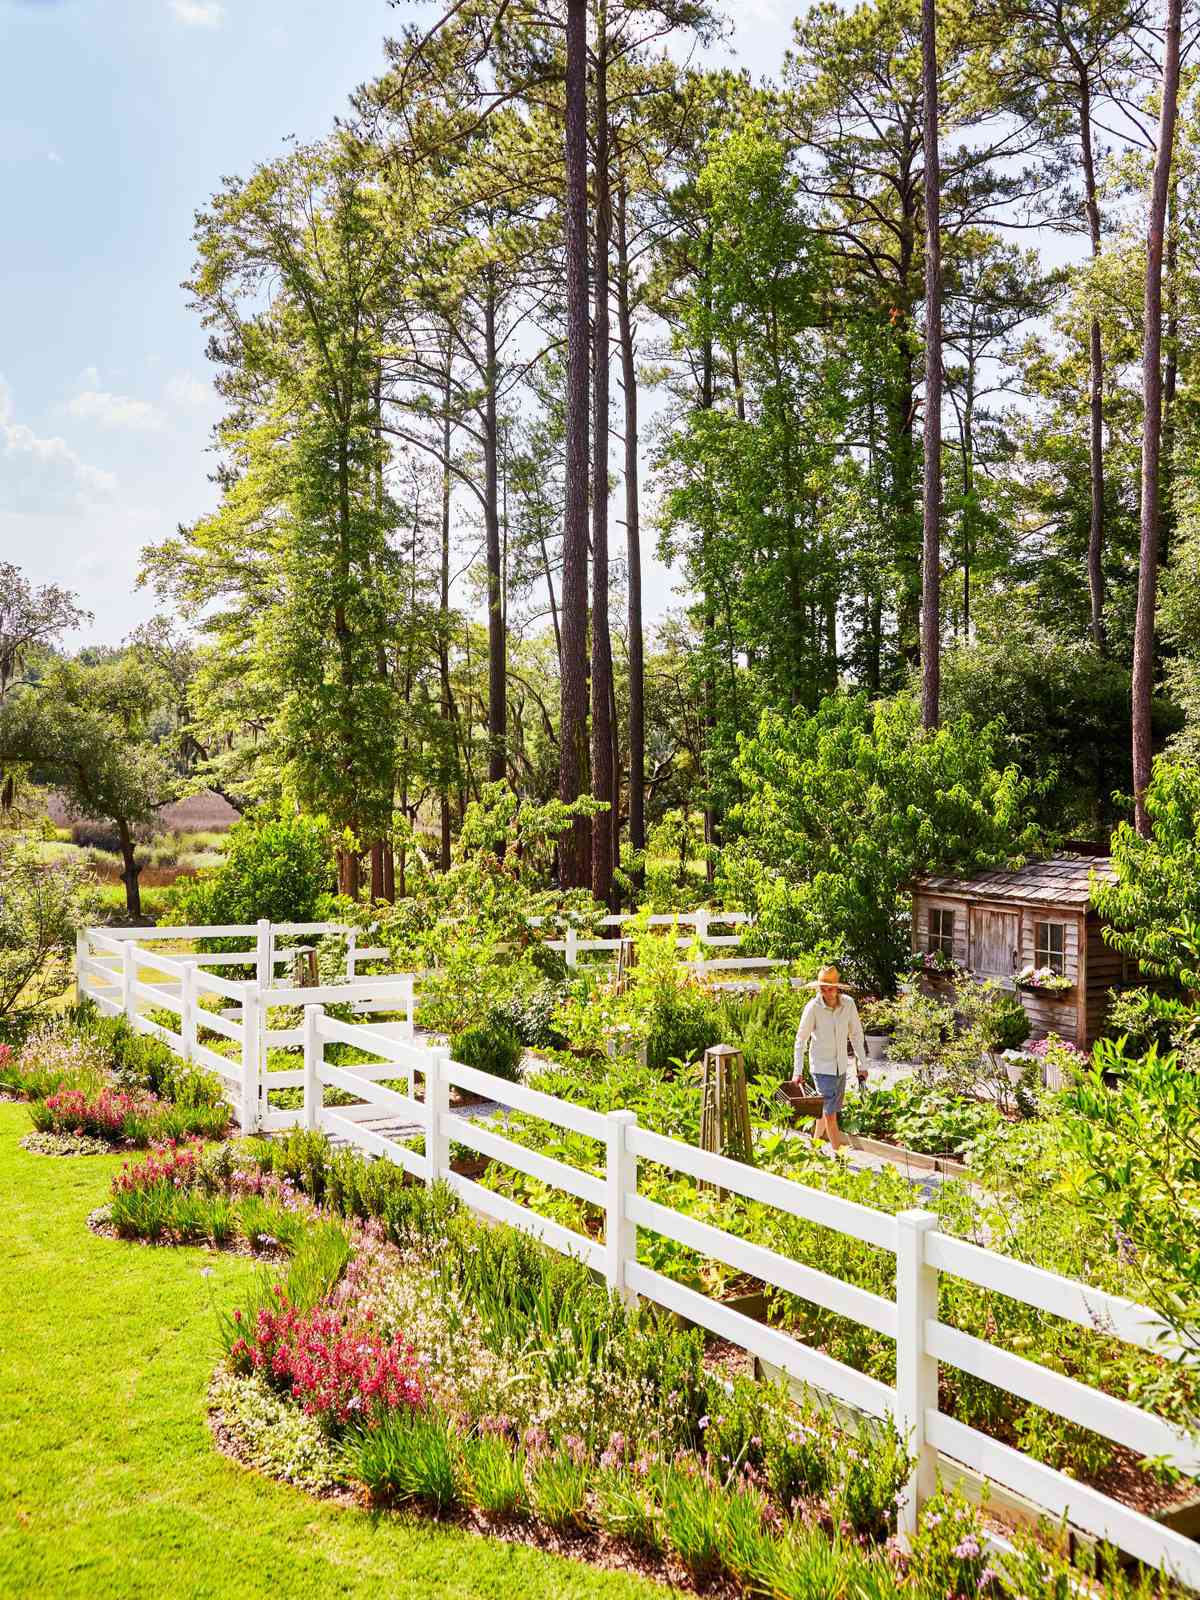 Ryan Clark's Fenced Vegetable Garden